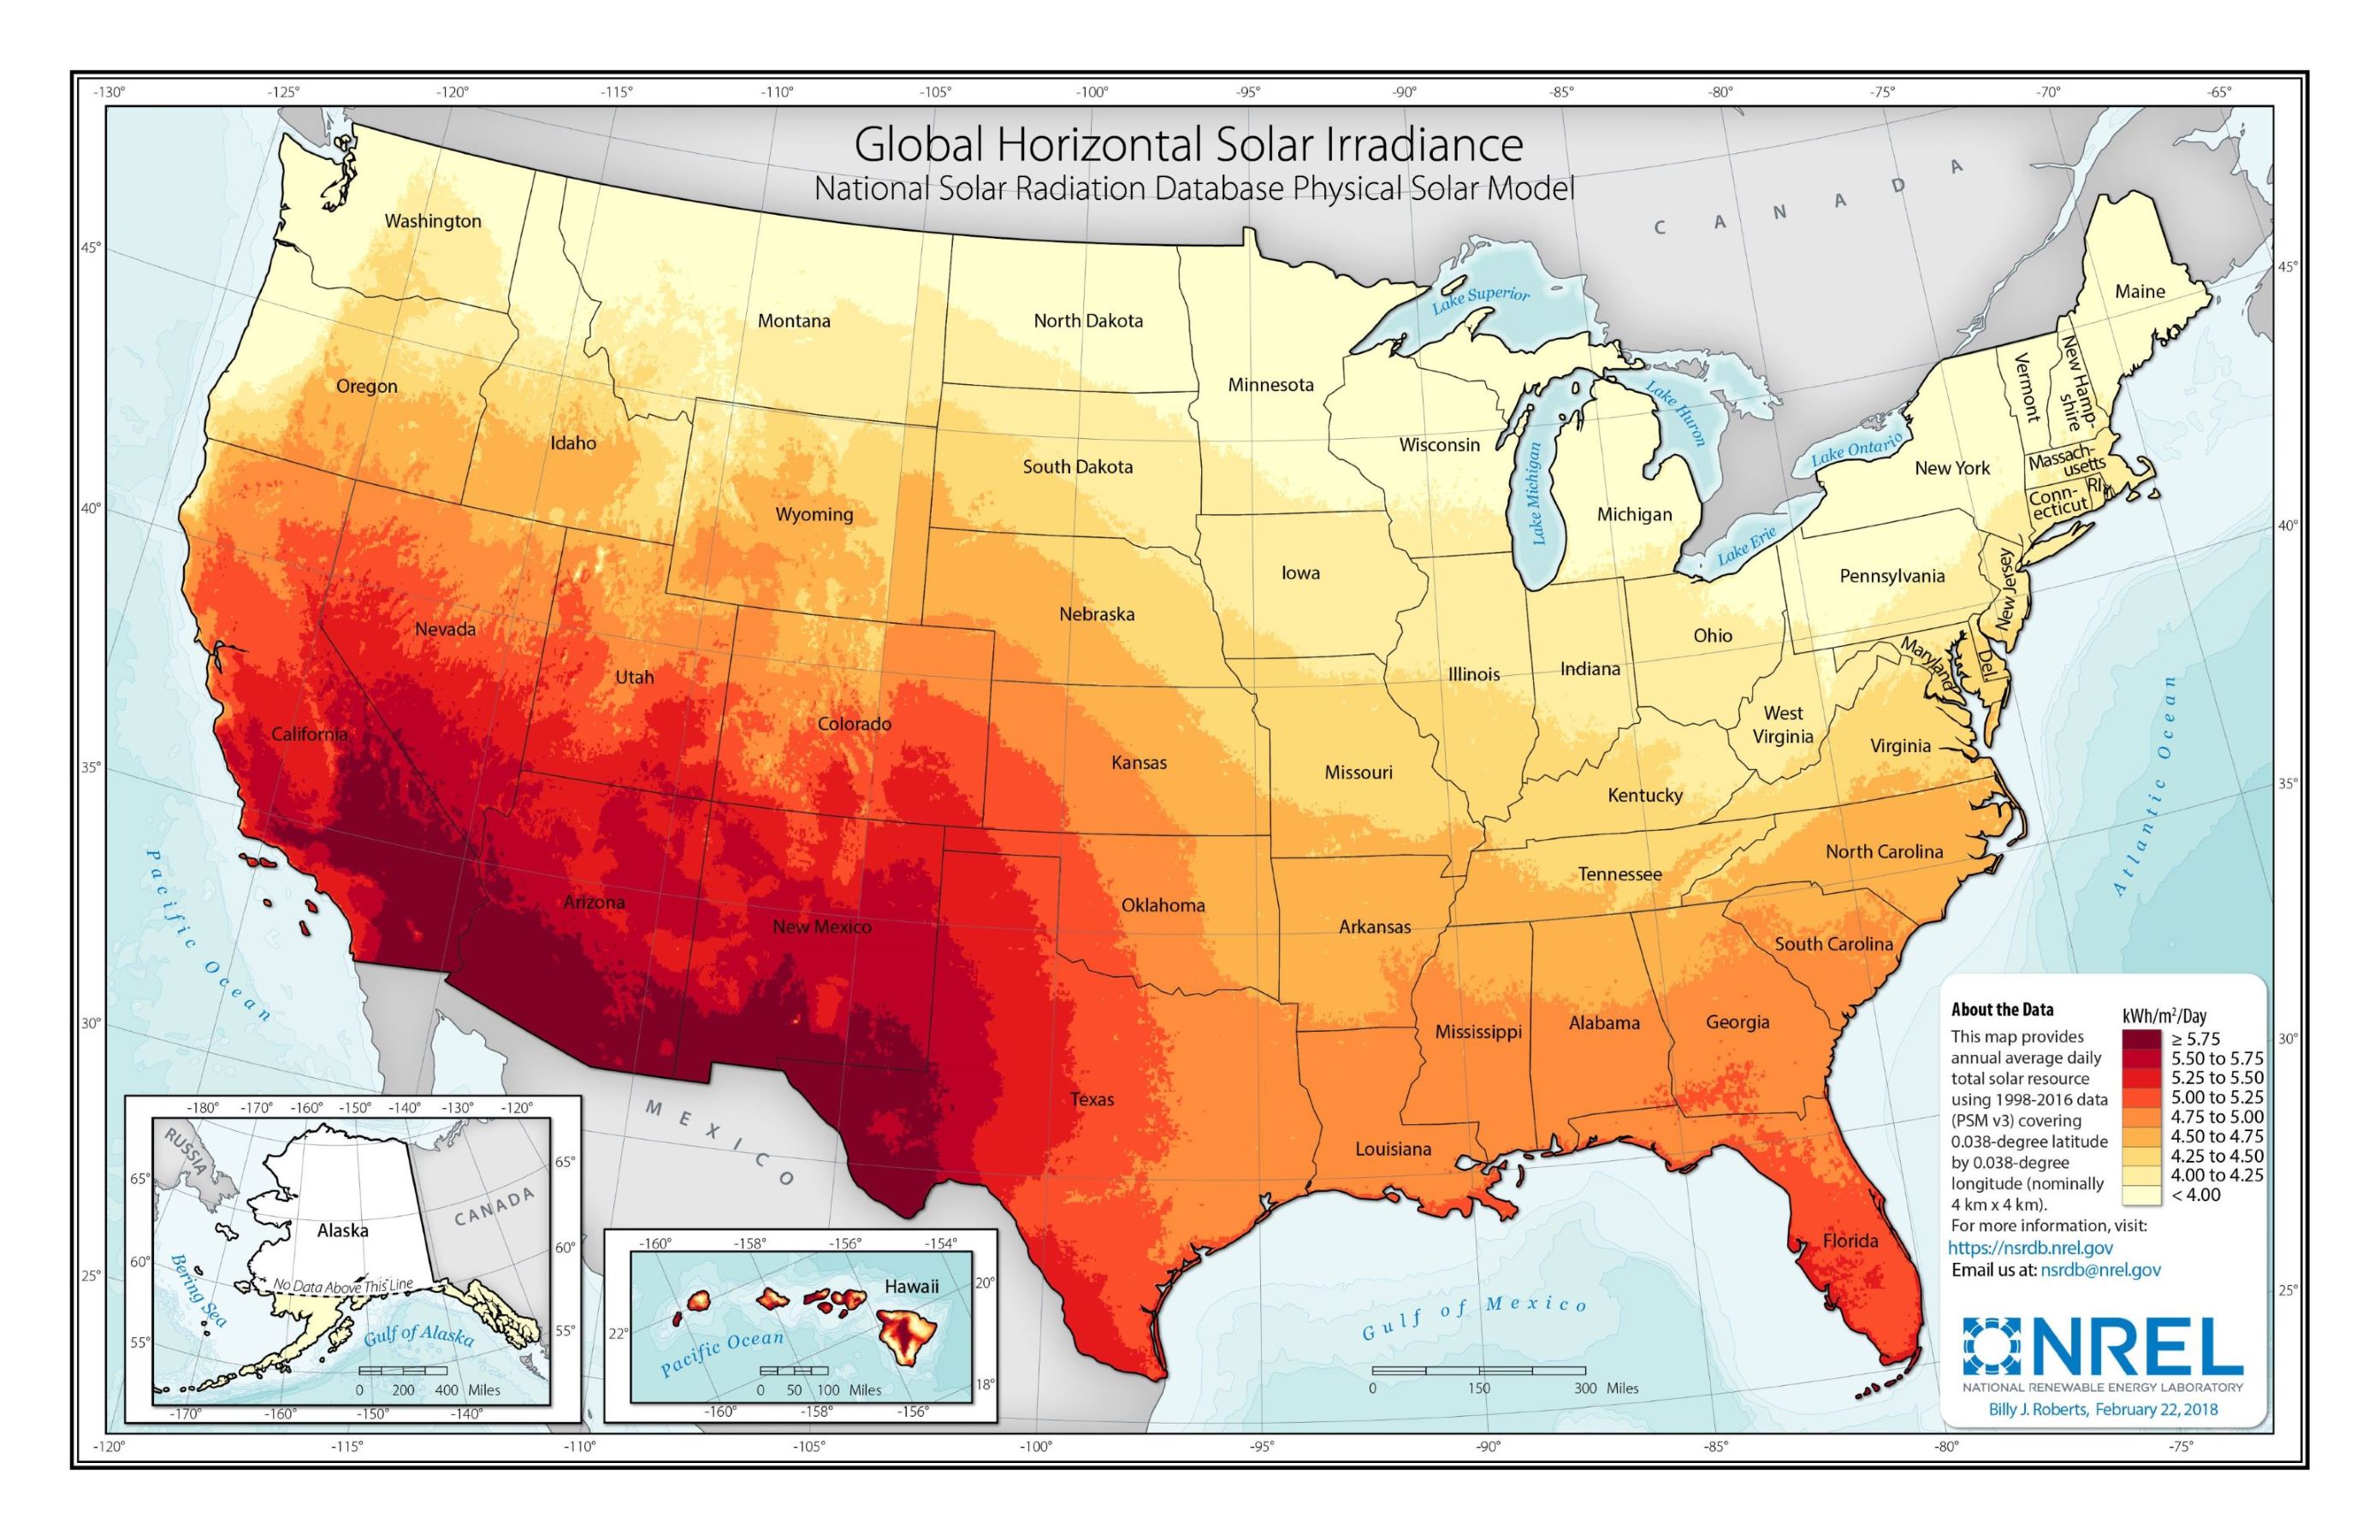 Peak Sun Hours Map of US